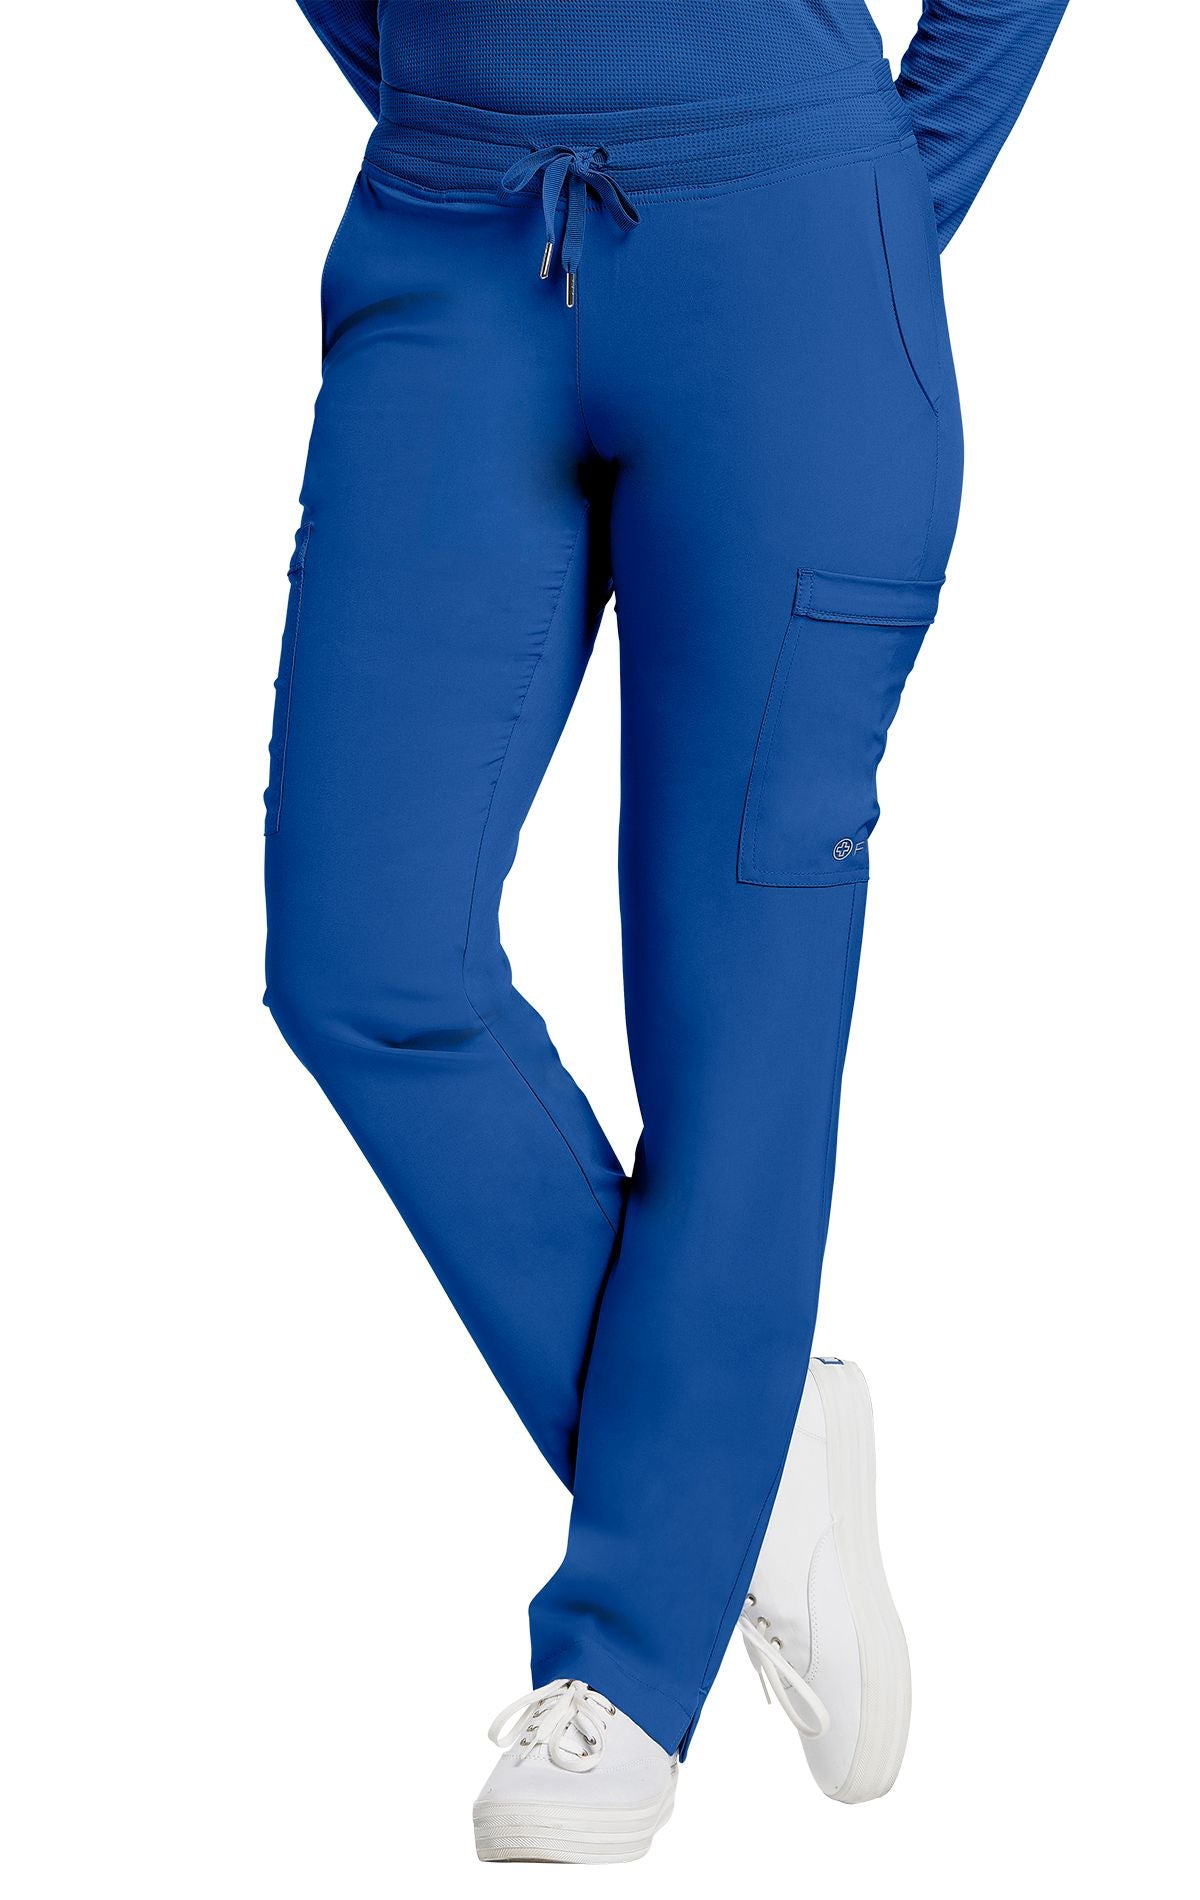 Women's straight pants - FIT - 373T long length